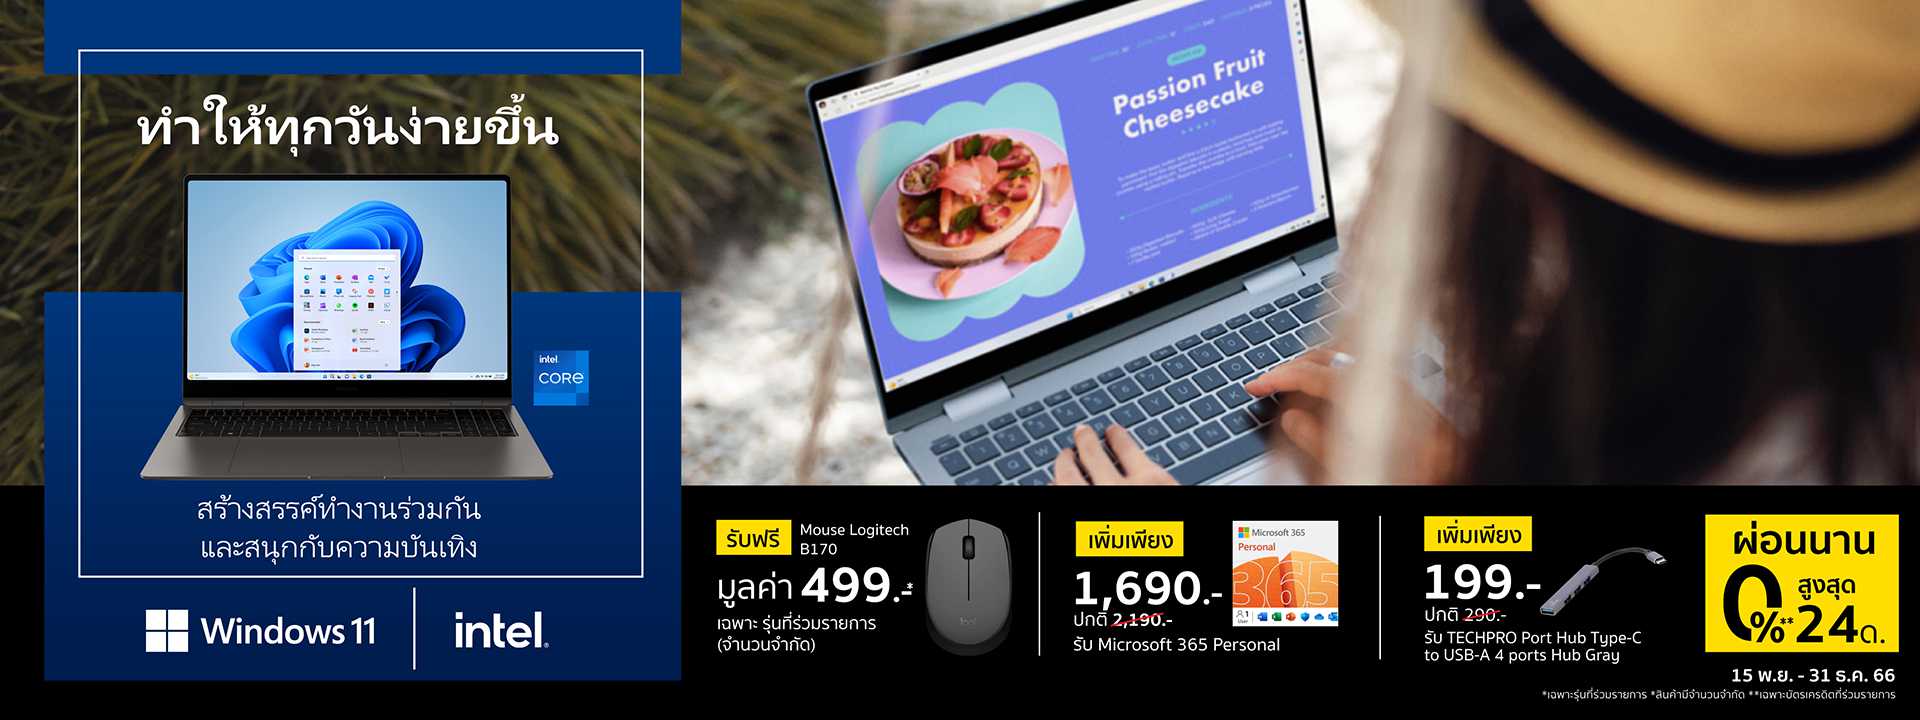 Intel Notebook Promotion